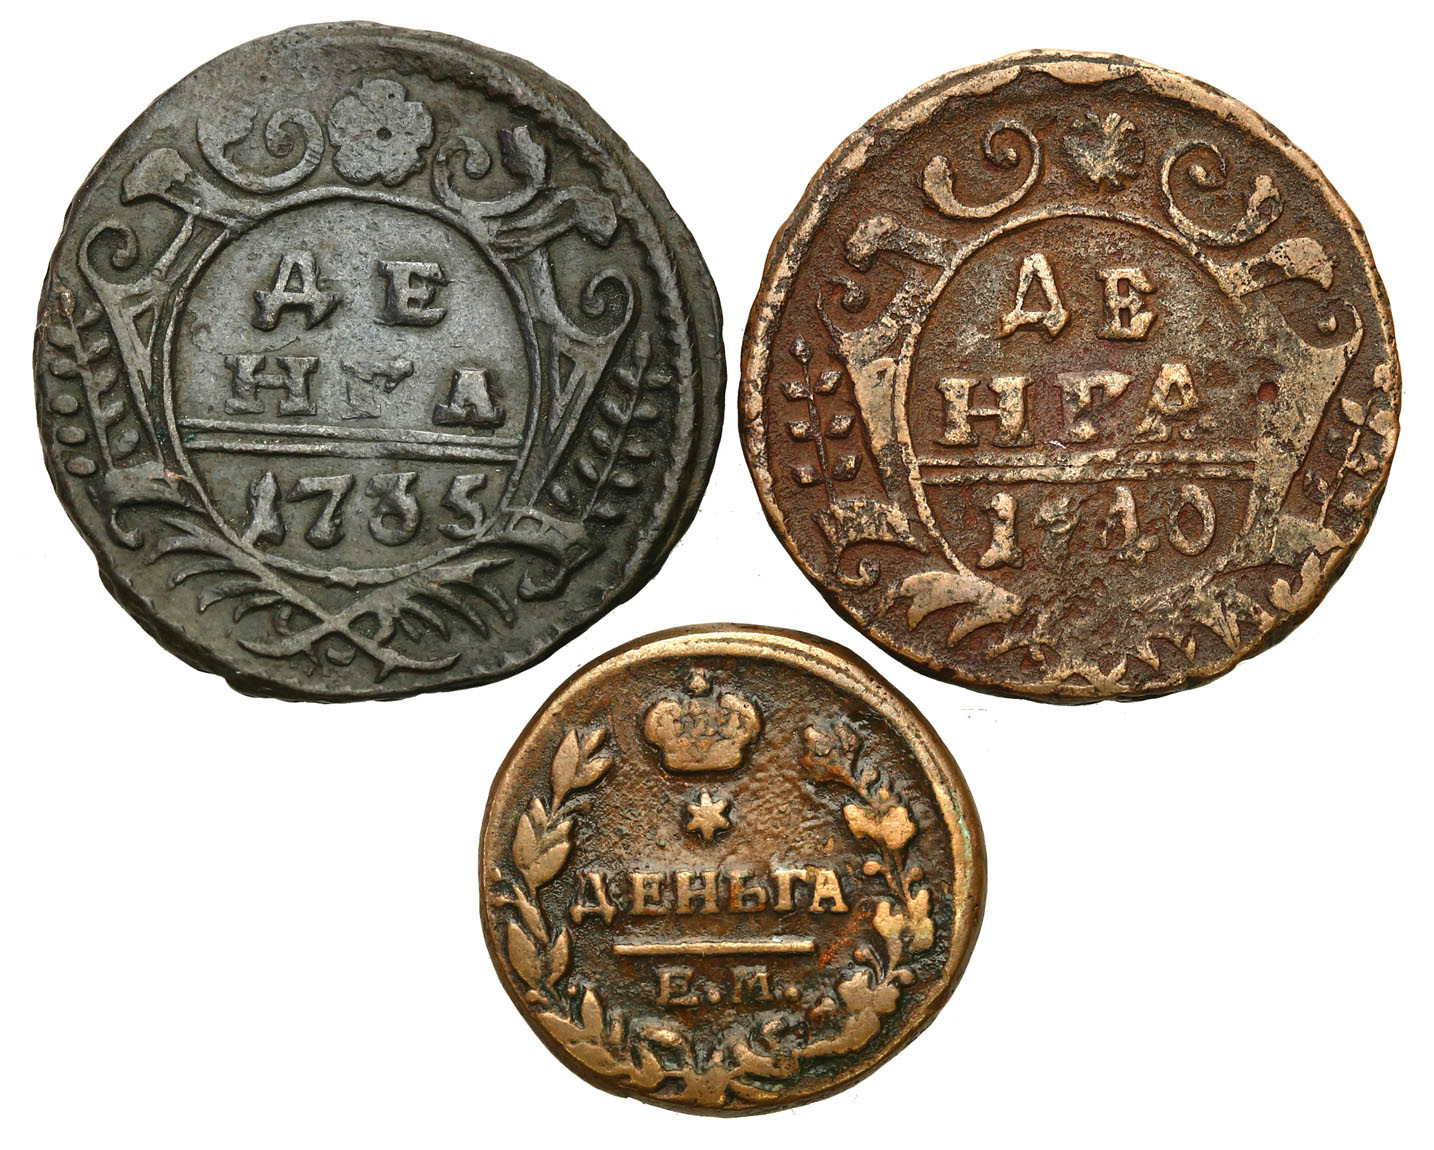 Rosja, Anna. Denga 1735, 1740, Mikołaj I - denga 1827?, zestaw 3 monet